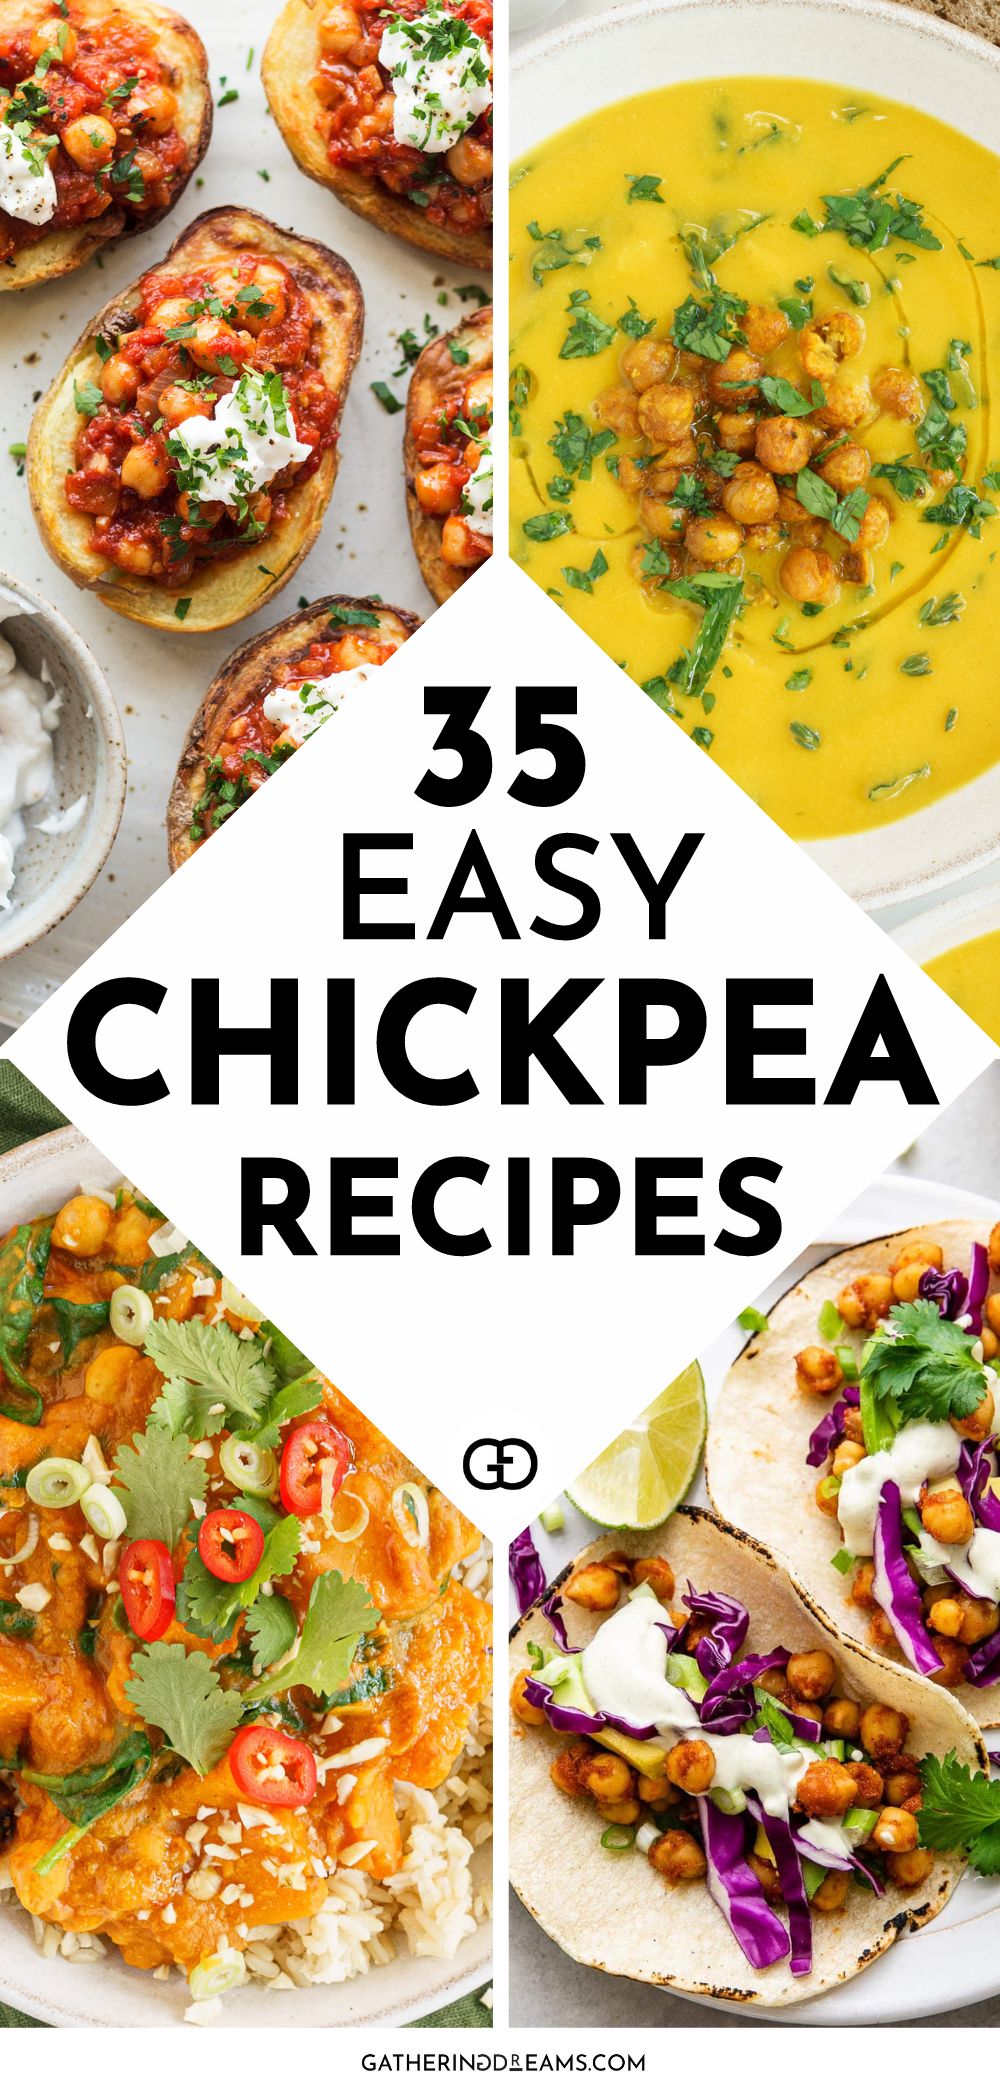 35 Easy Chickpea Recipes - Gathering Dreams